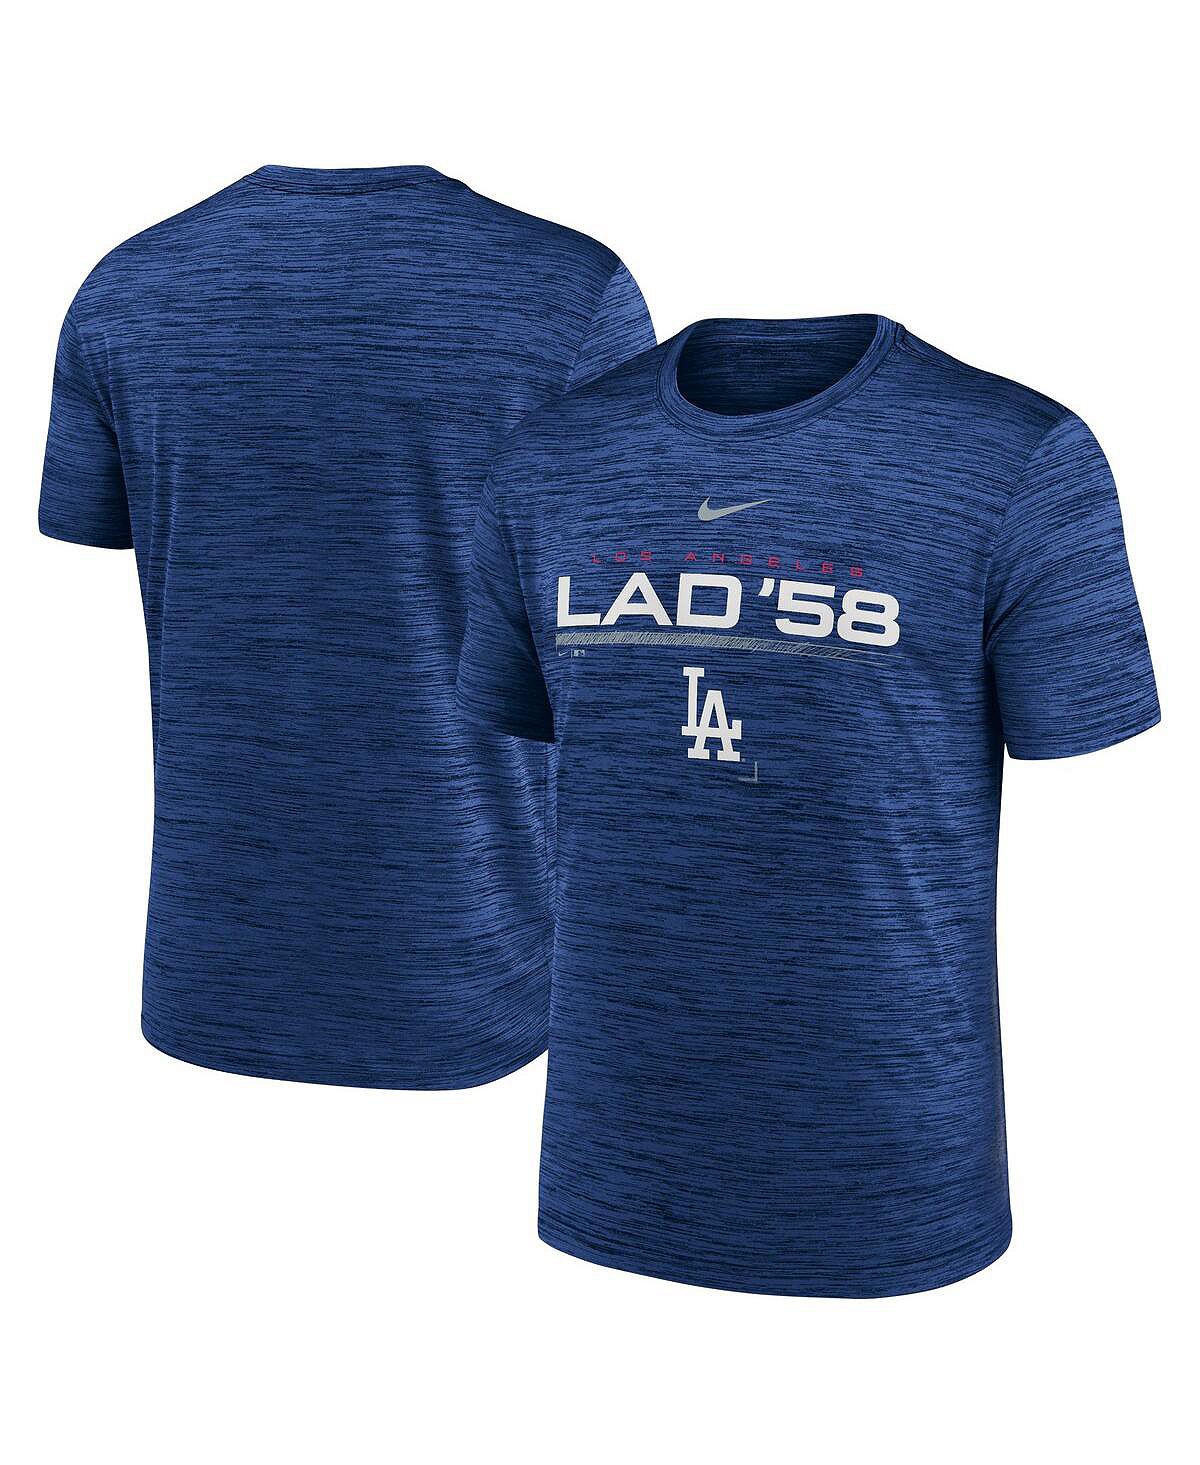 Мужская футболка Royal Los Angeles Dodgers с надписью Velocity Performance Nike мужская черная футболка los angeles sparks для тренировок nike черный